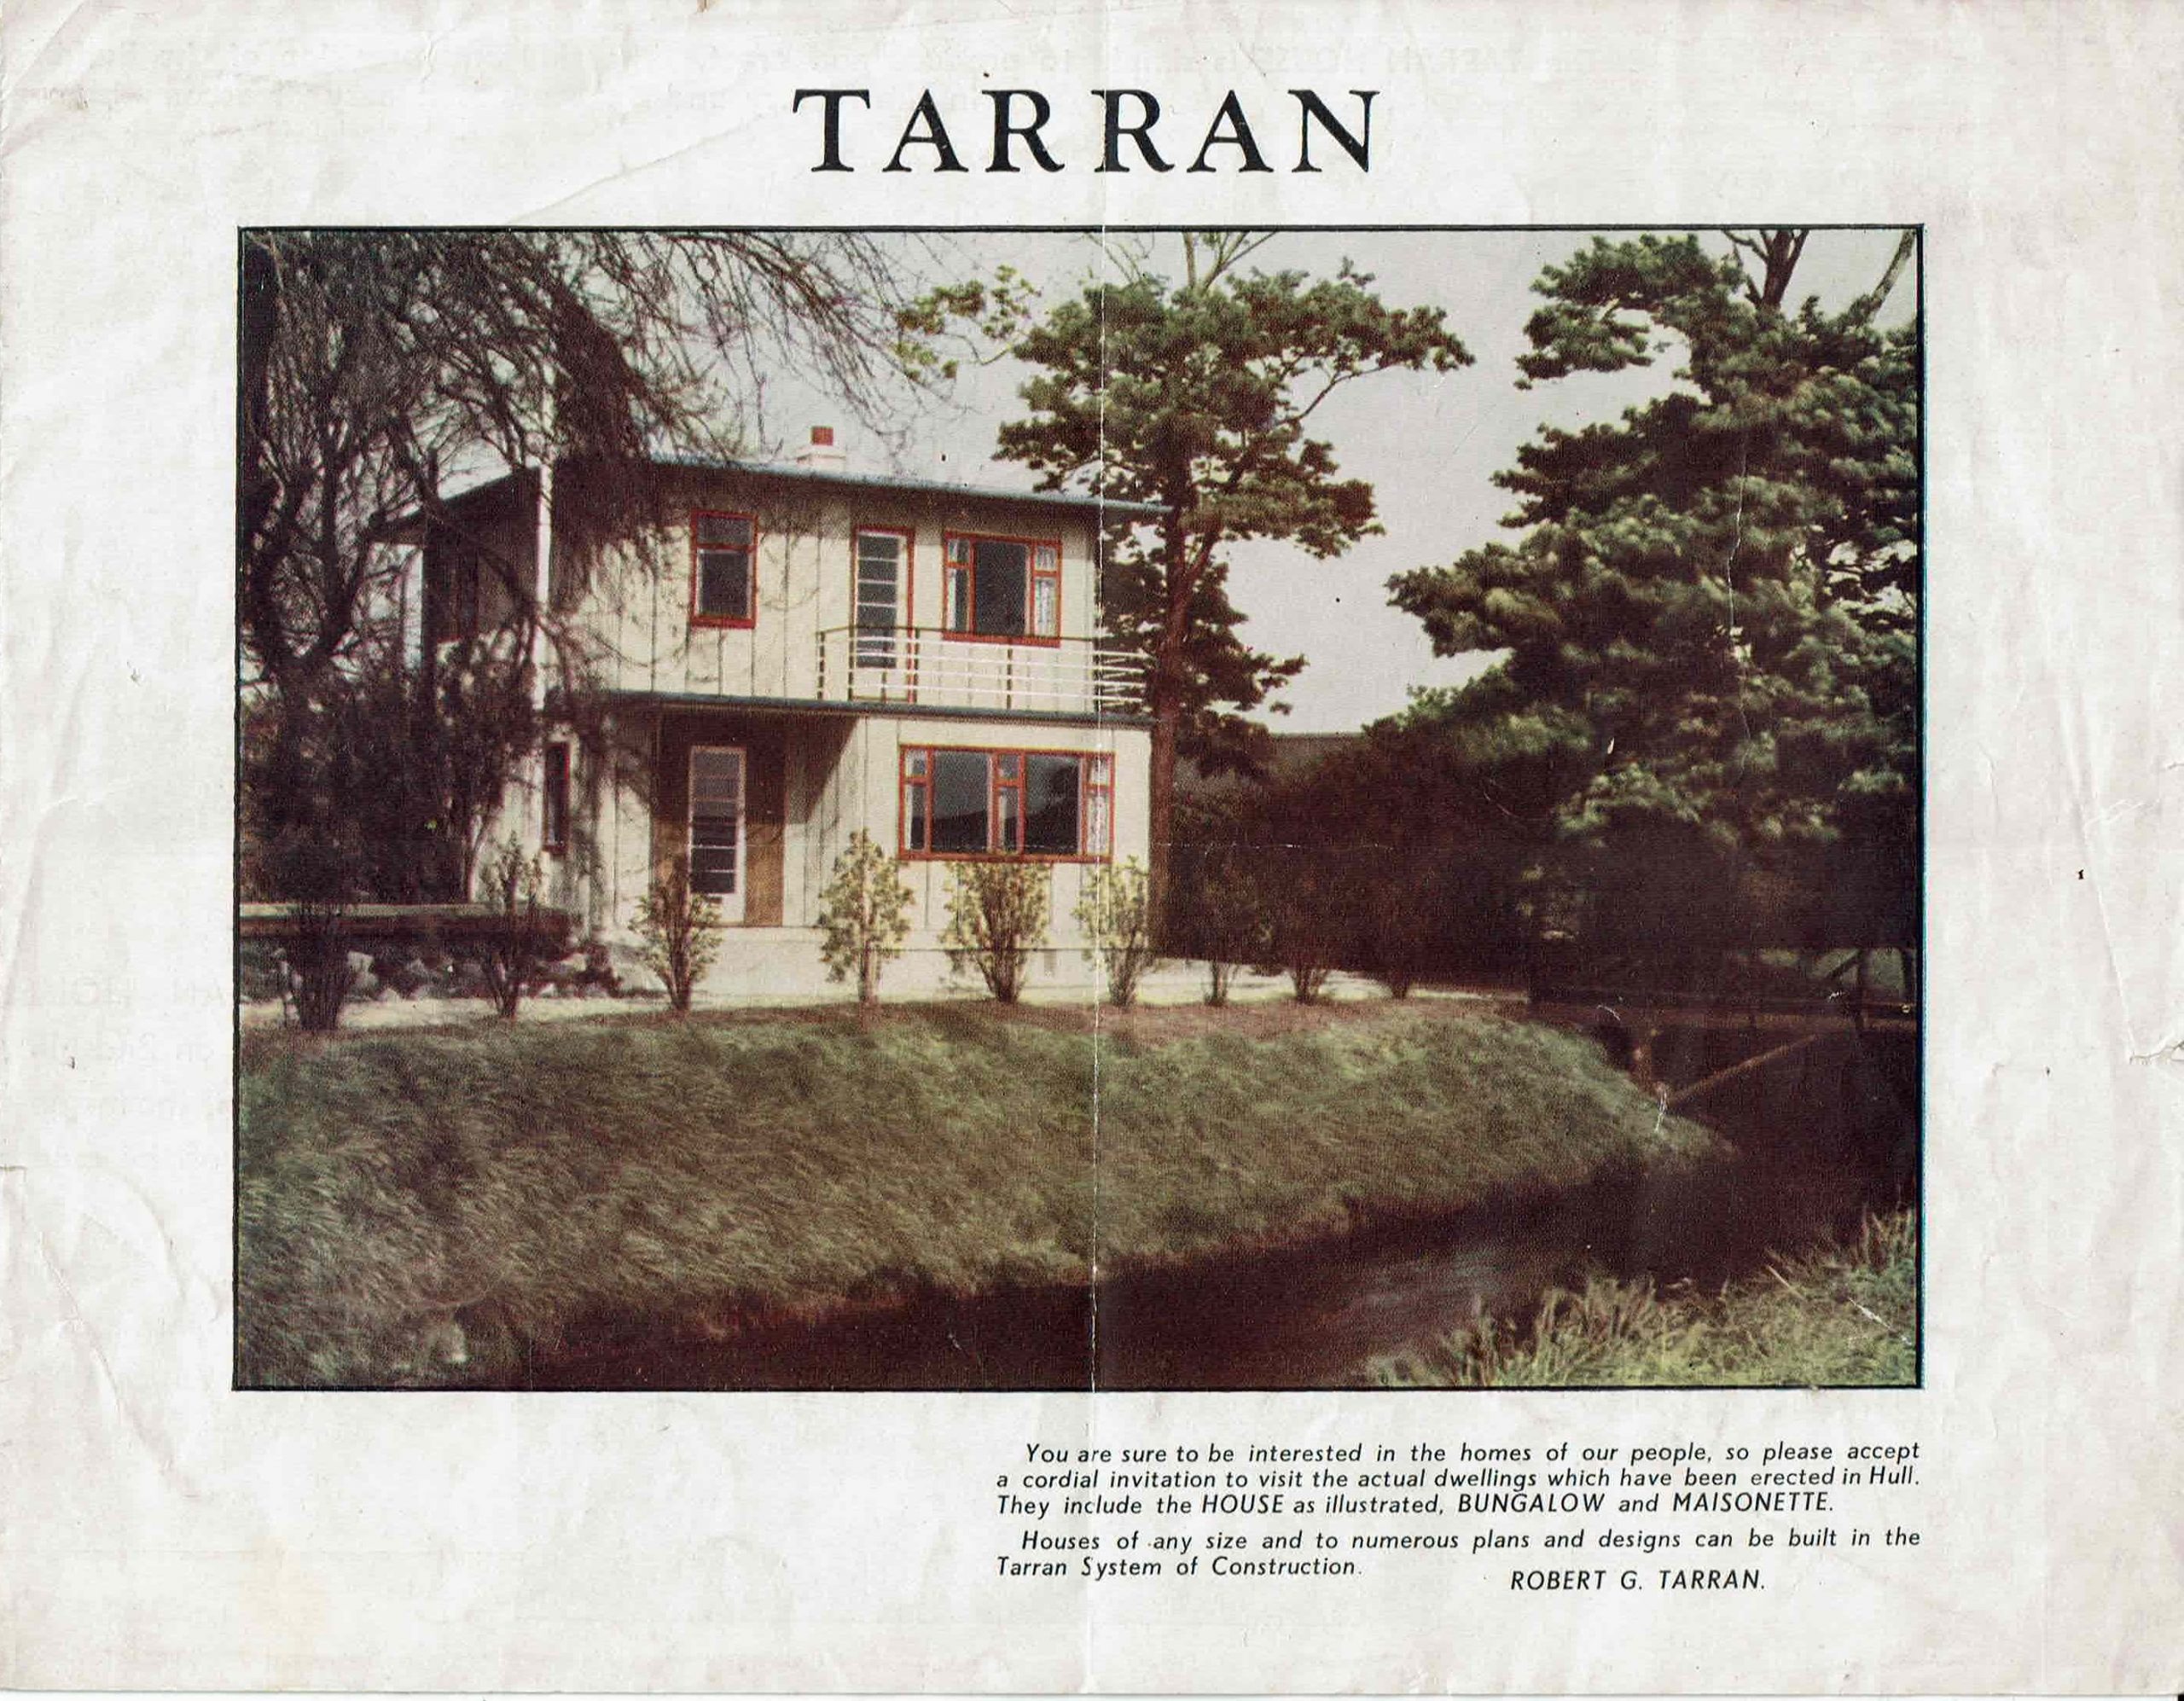 Tarran detached house brochure, front cover